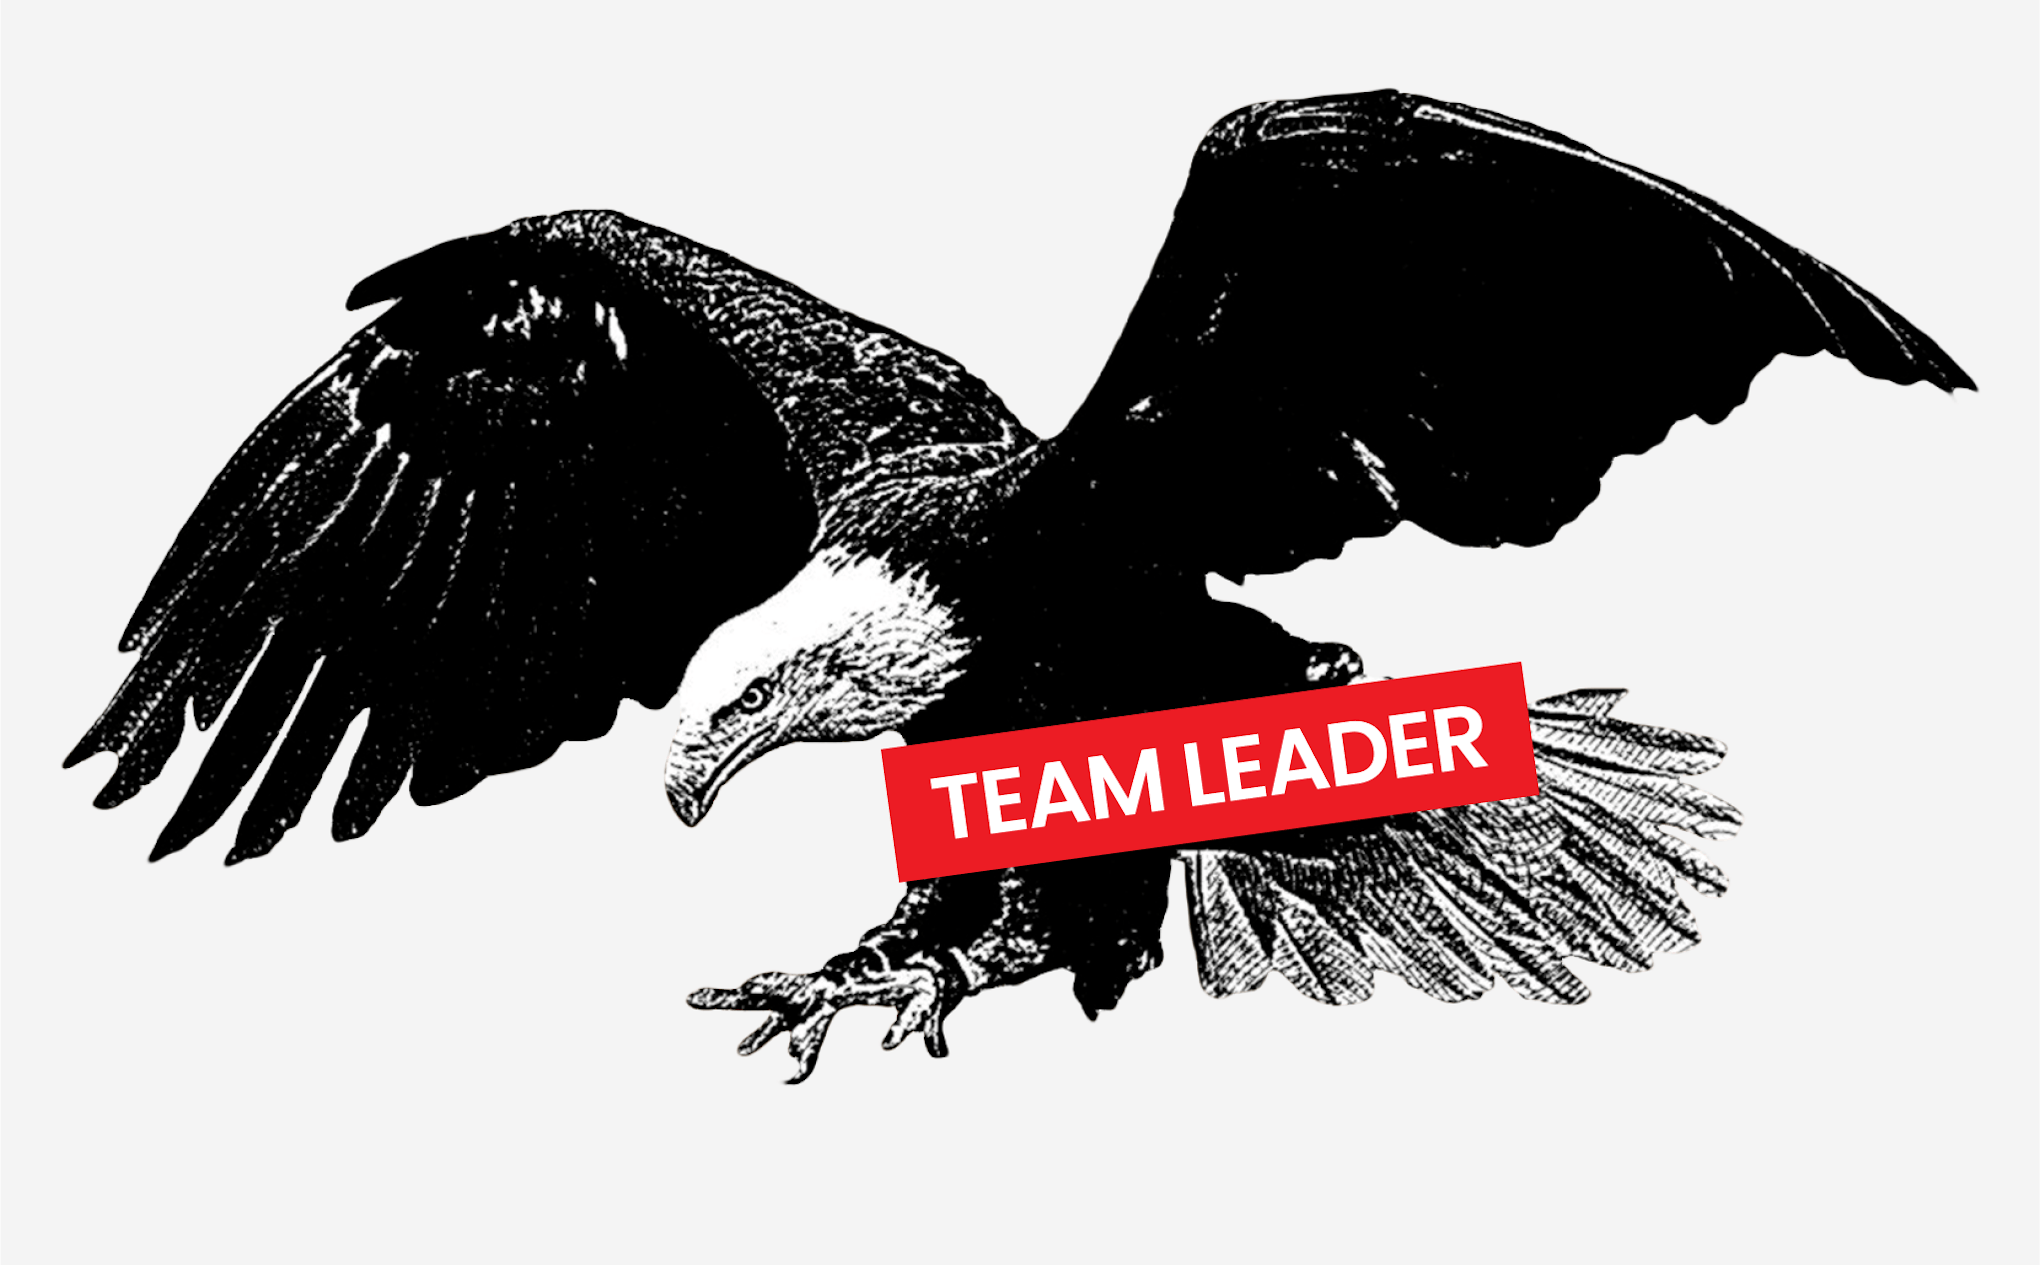 Team leader